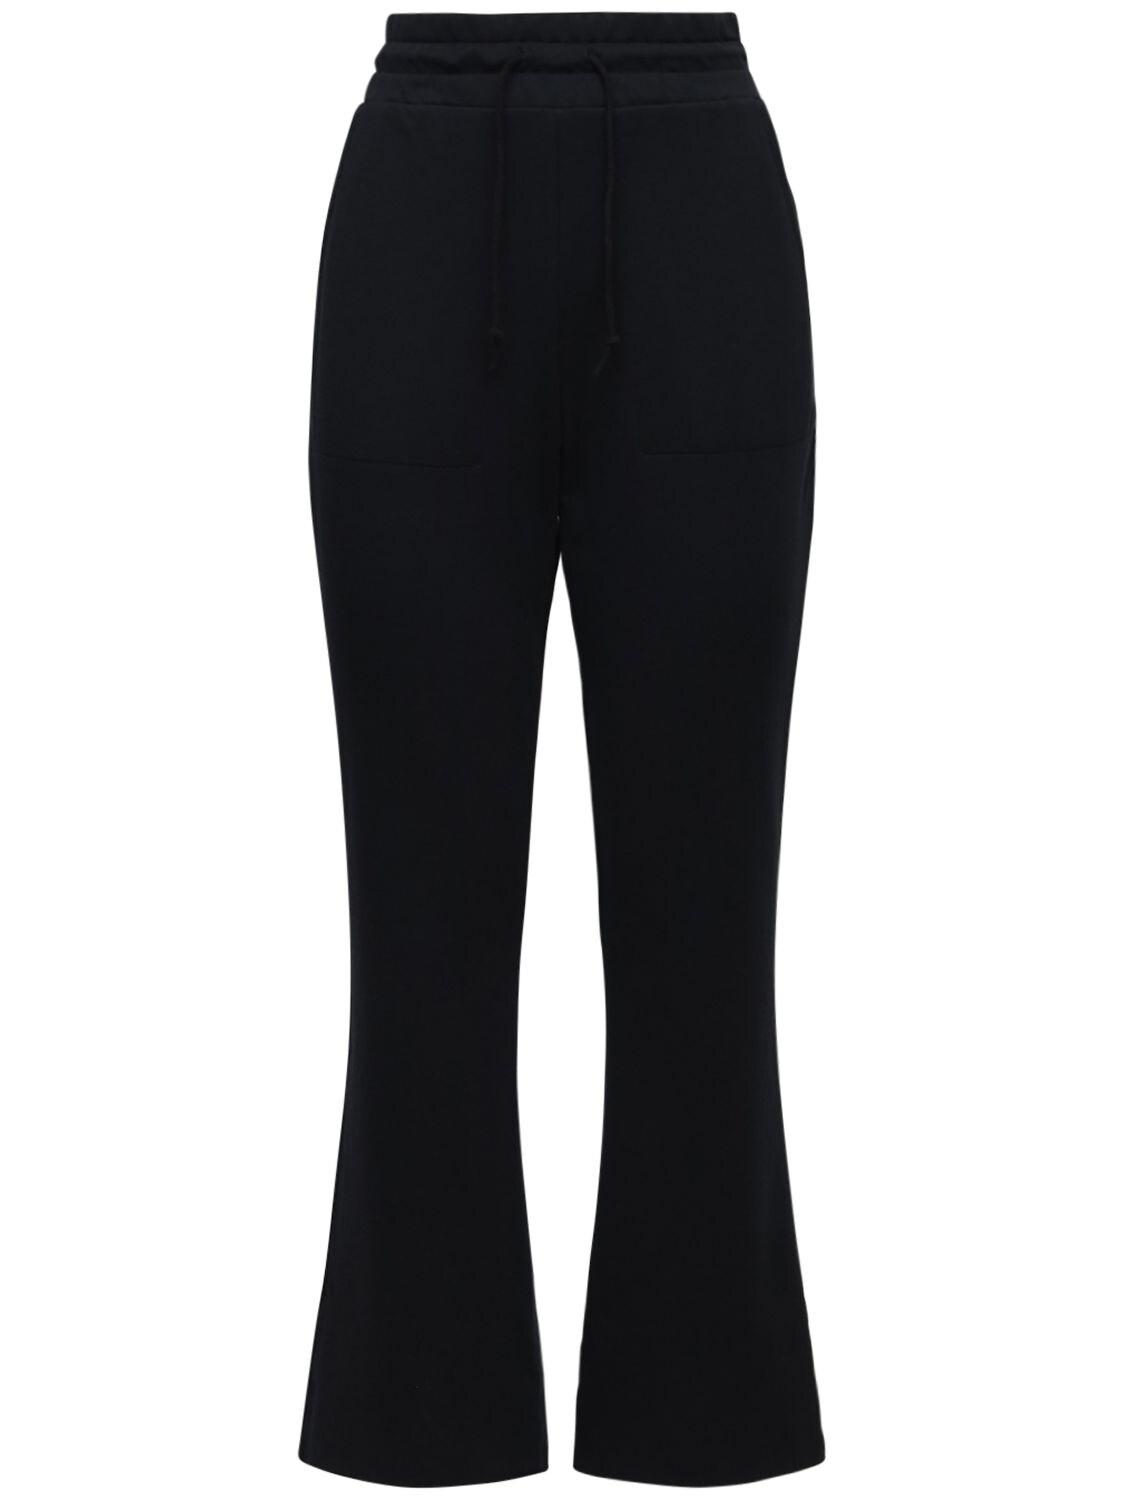 Nike Dri-fit Flared Yoga Full Length Pants in Black